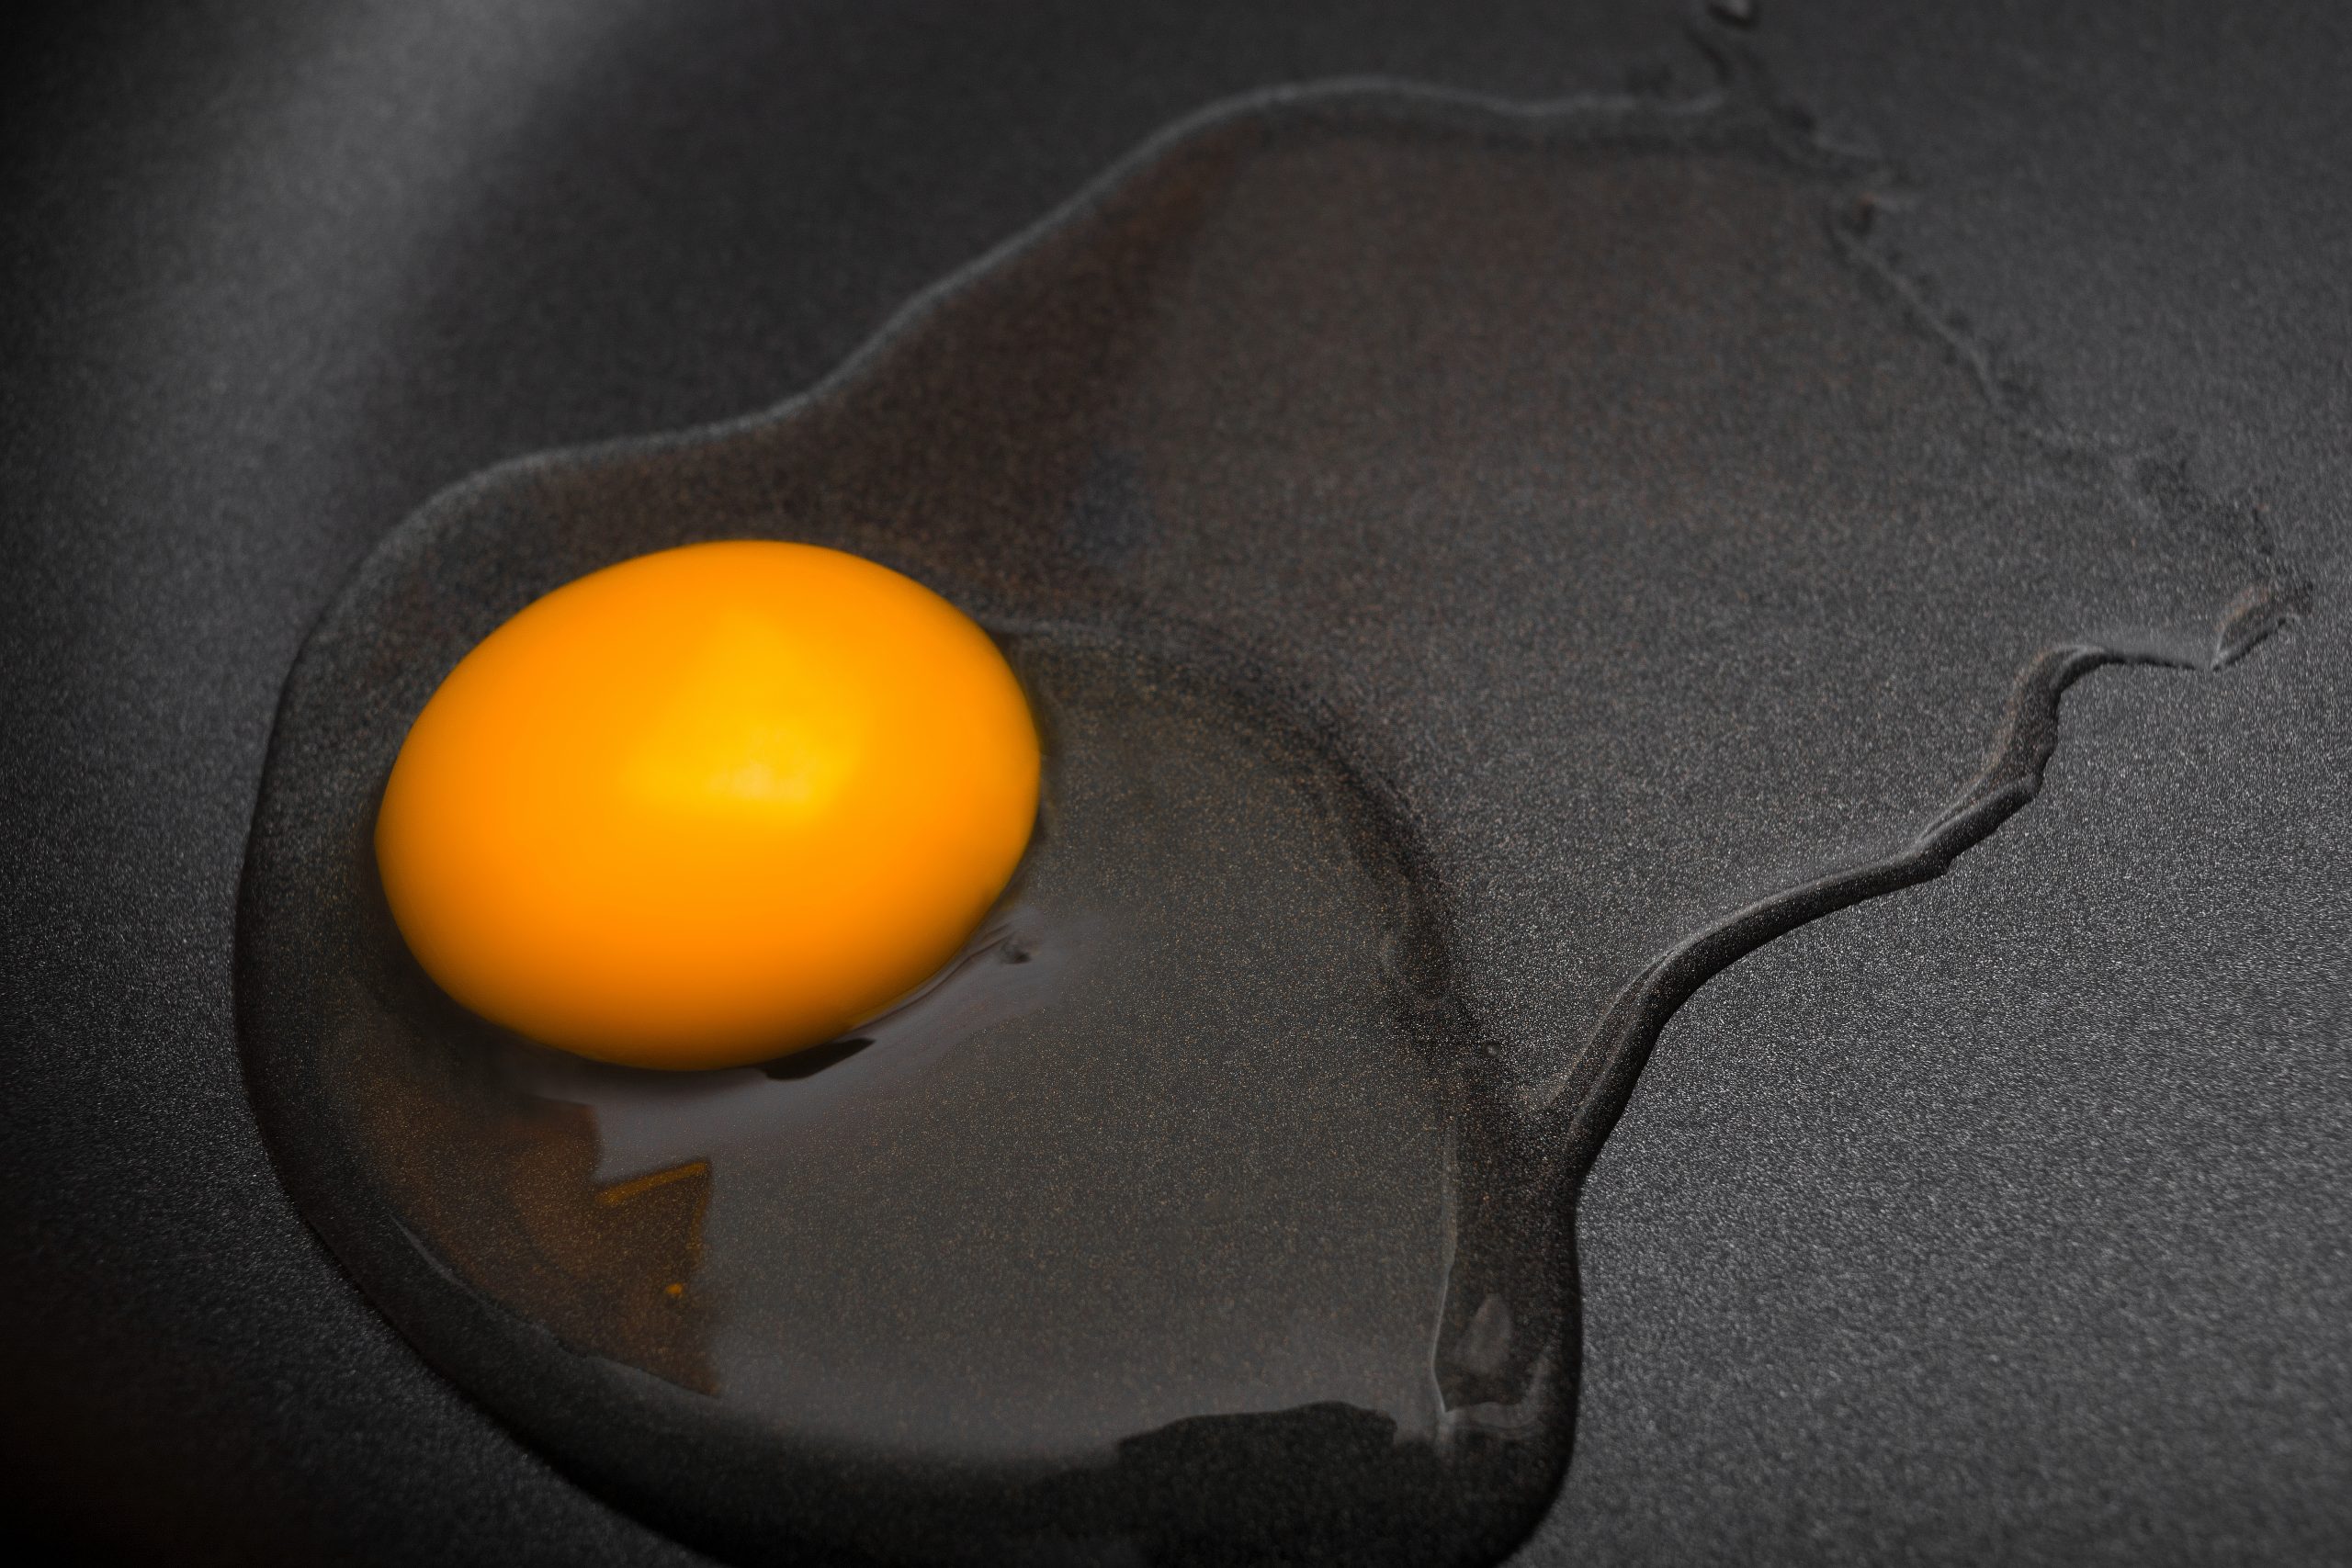 Raw egg on Teflon non-stick frying pan close-up